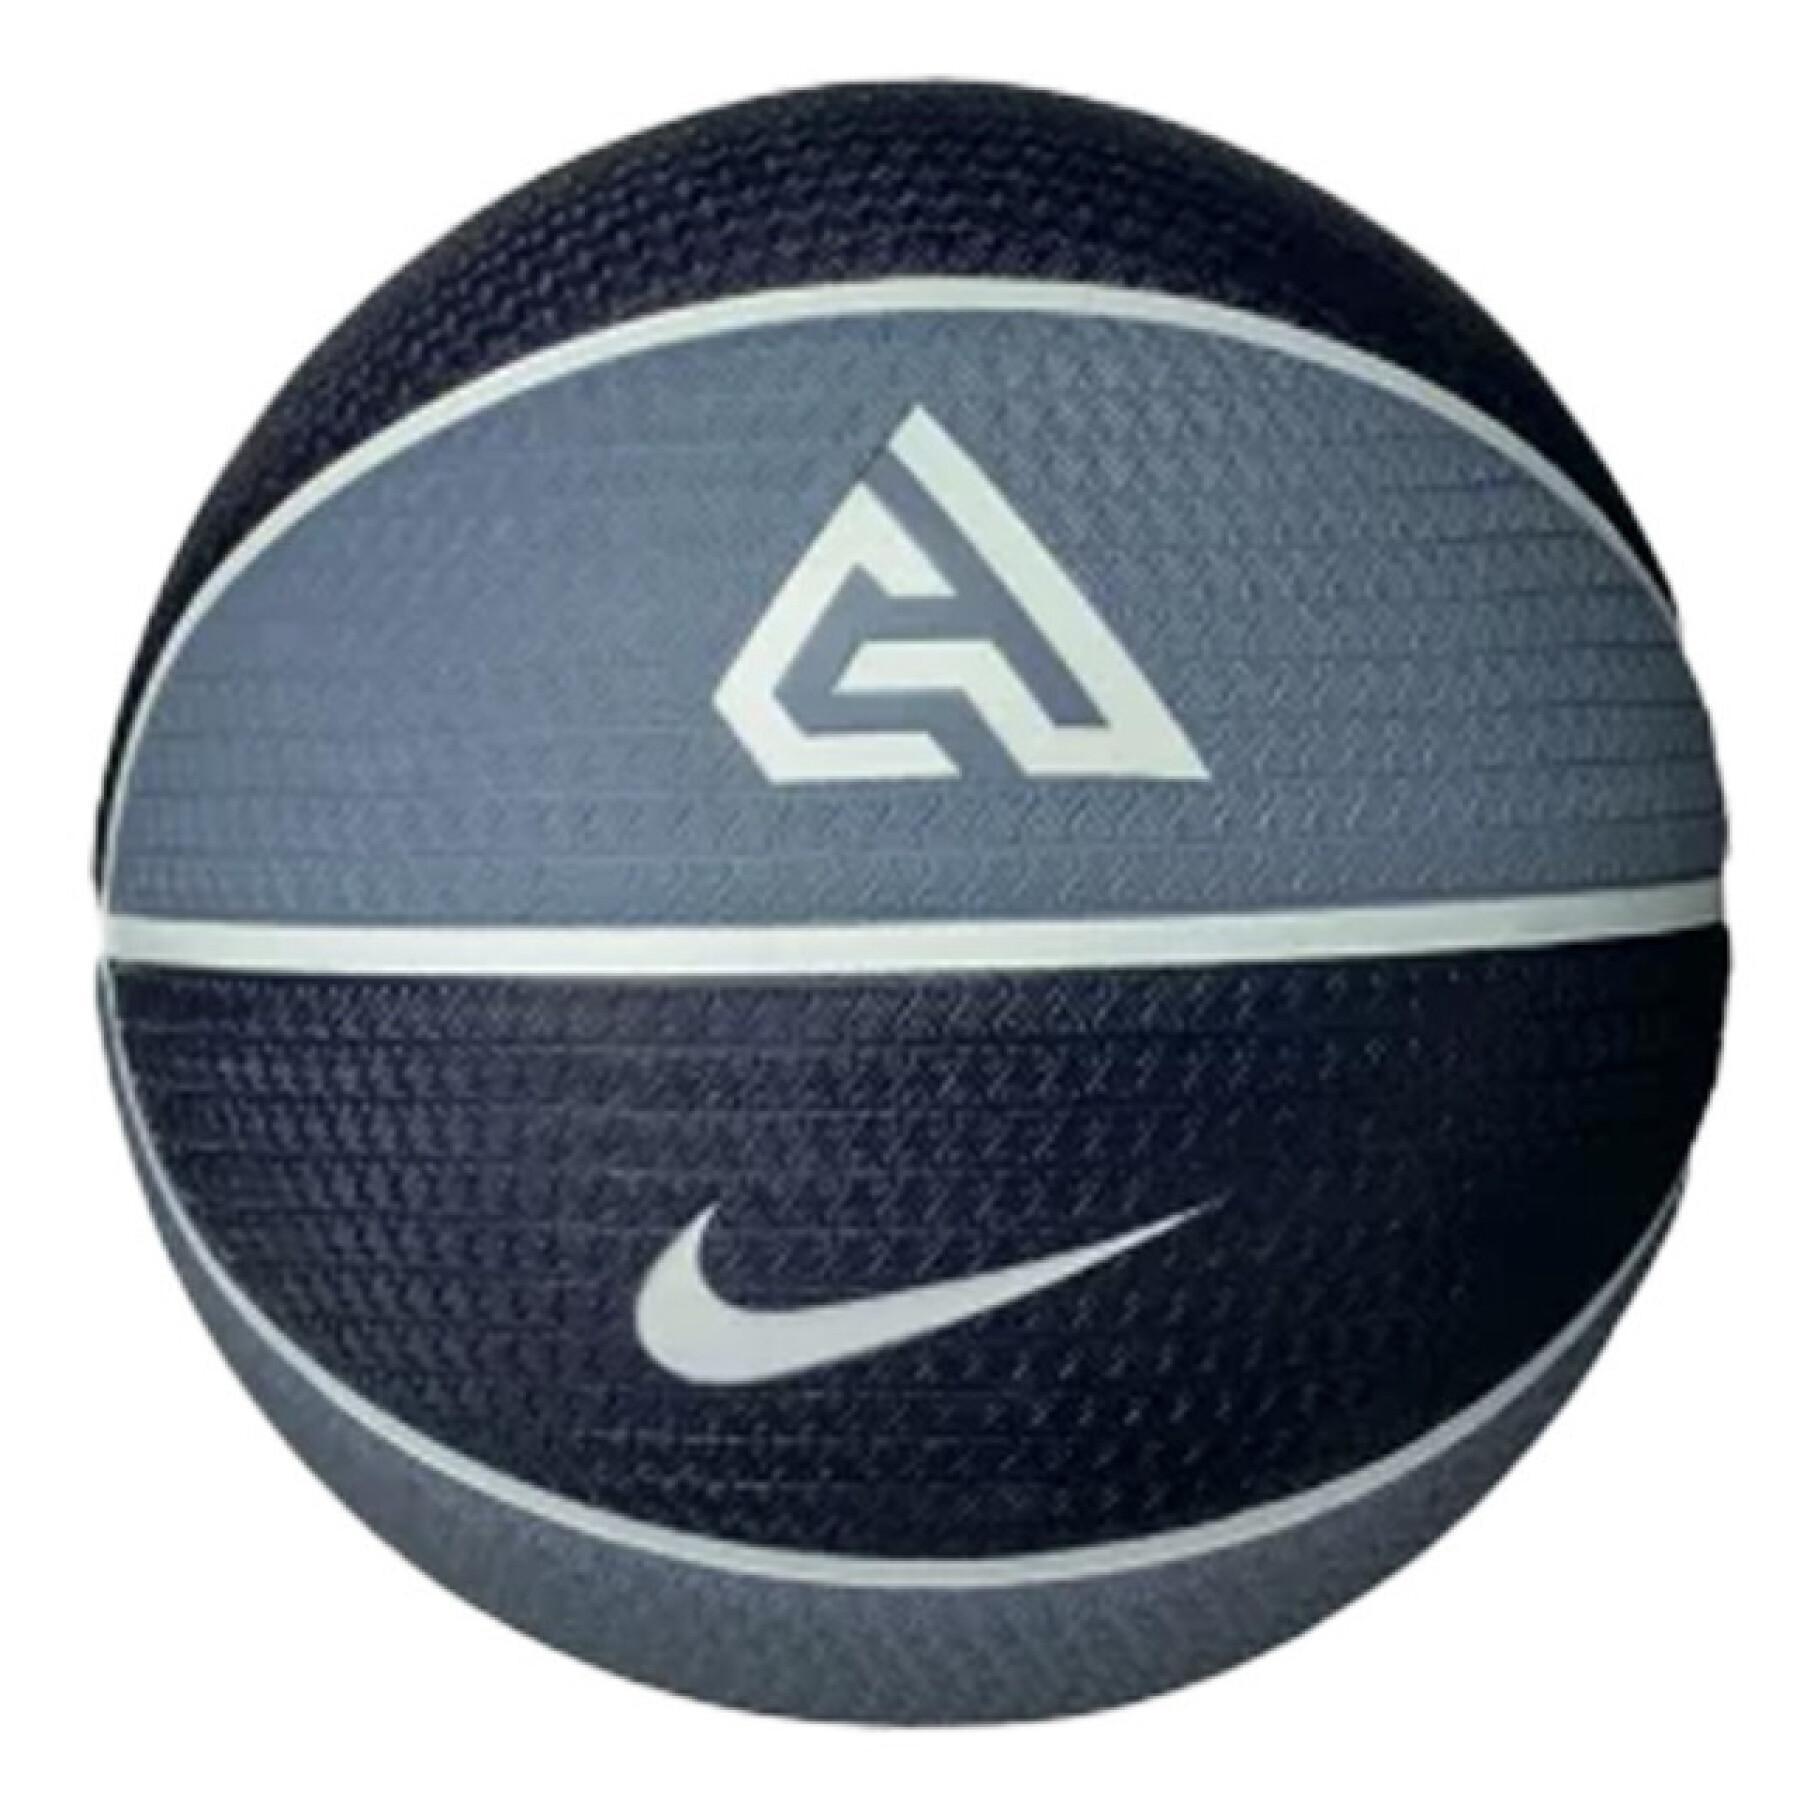 Basketboll Nike Playground 8P 2.0 G Antetokounmpo Deflated